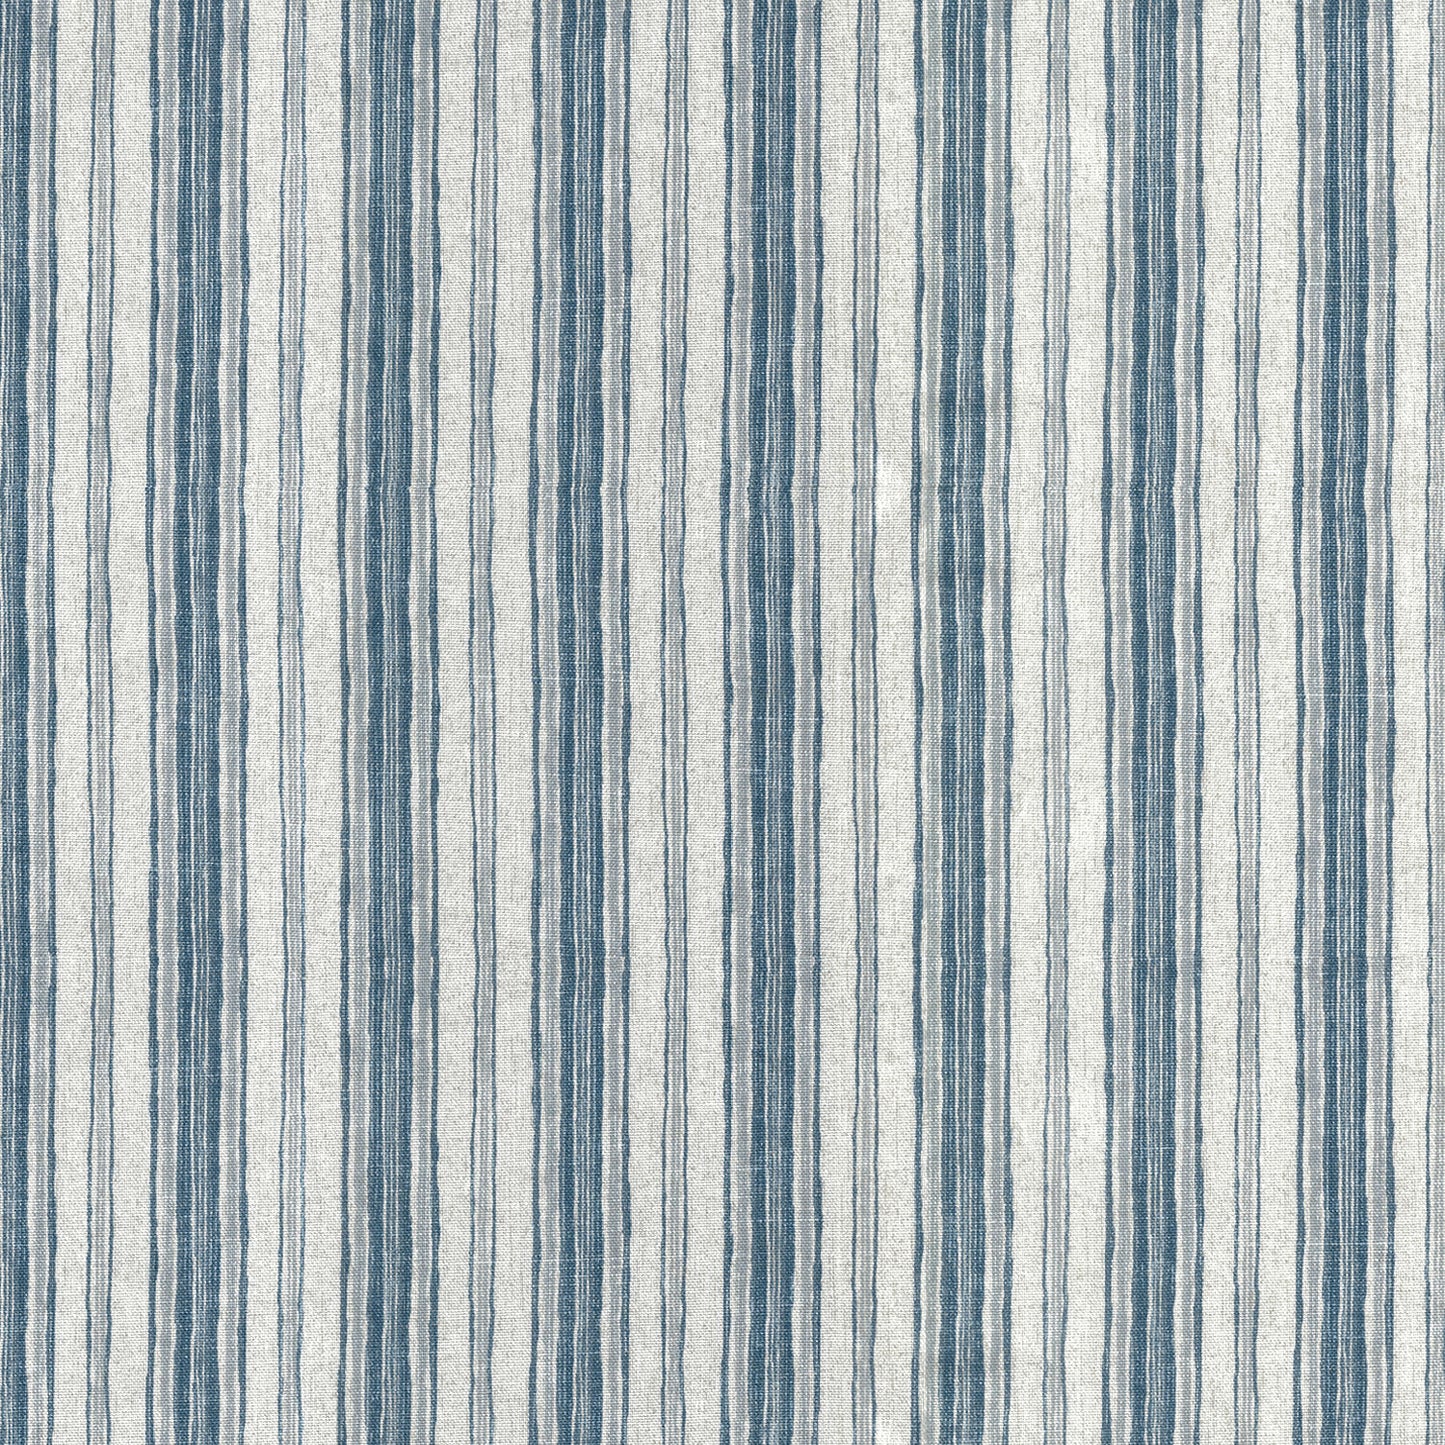 tailored bedskirt in brunswick denim blue stripe